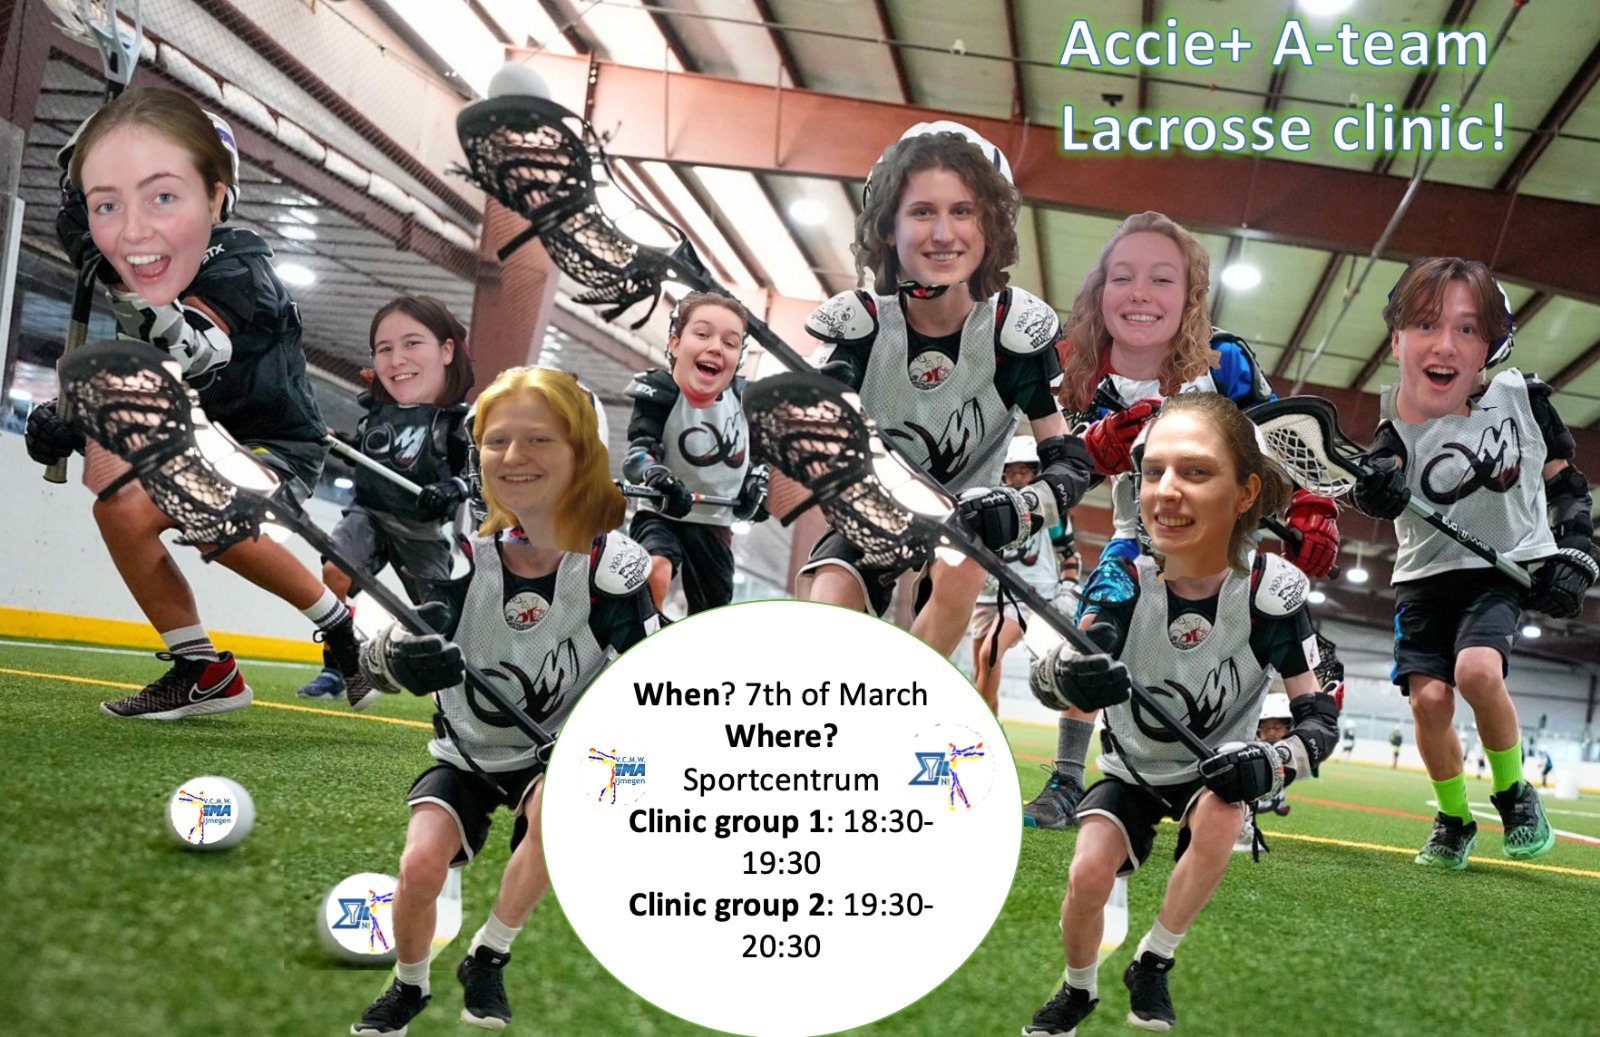 Accie/A-team: Lacrosse clinic